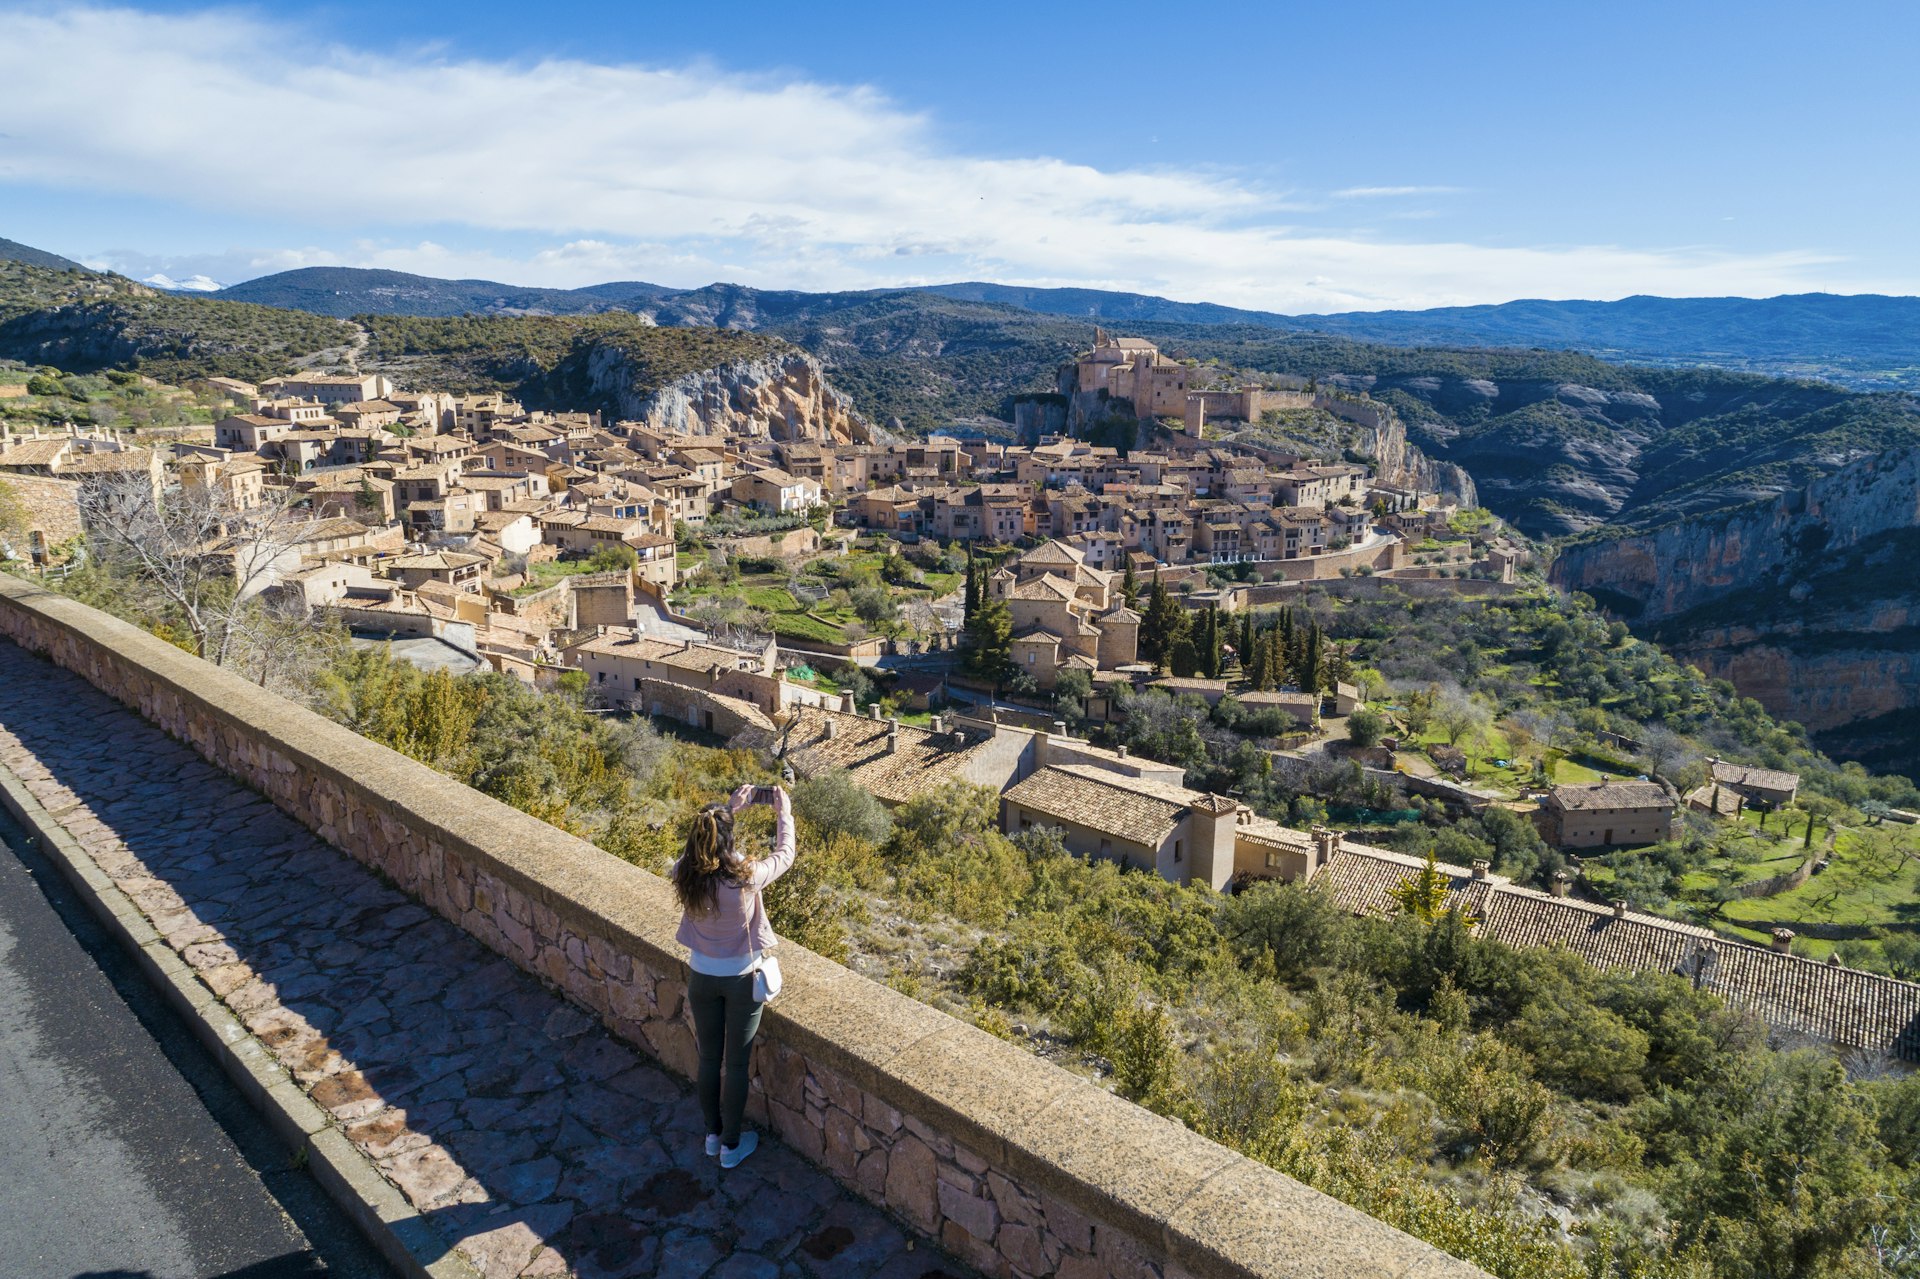 A tourist takes a picture of the hillside Alquezar village in Huesca, Aragon, Spain